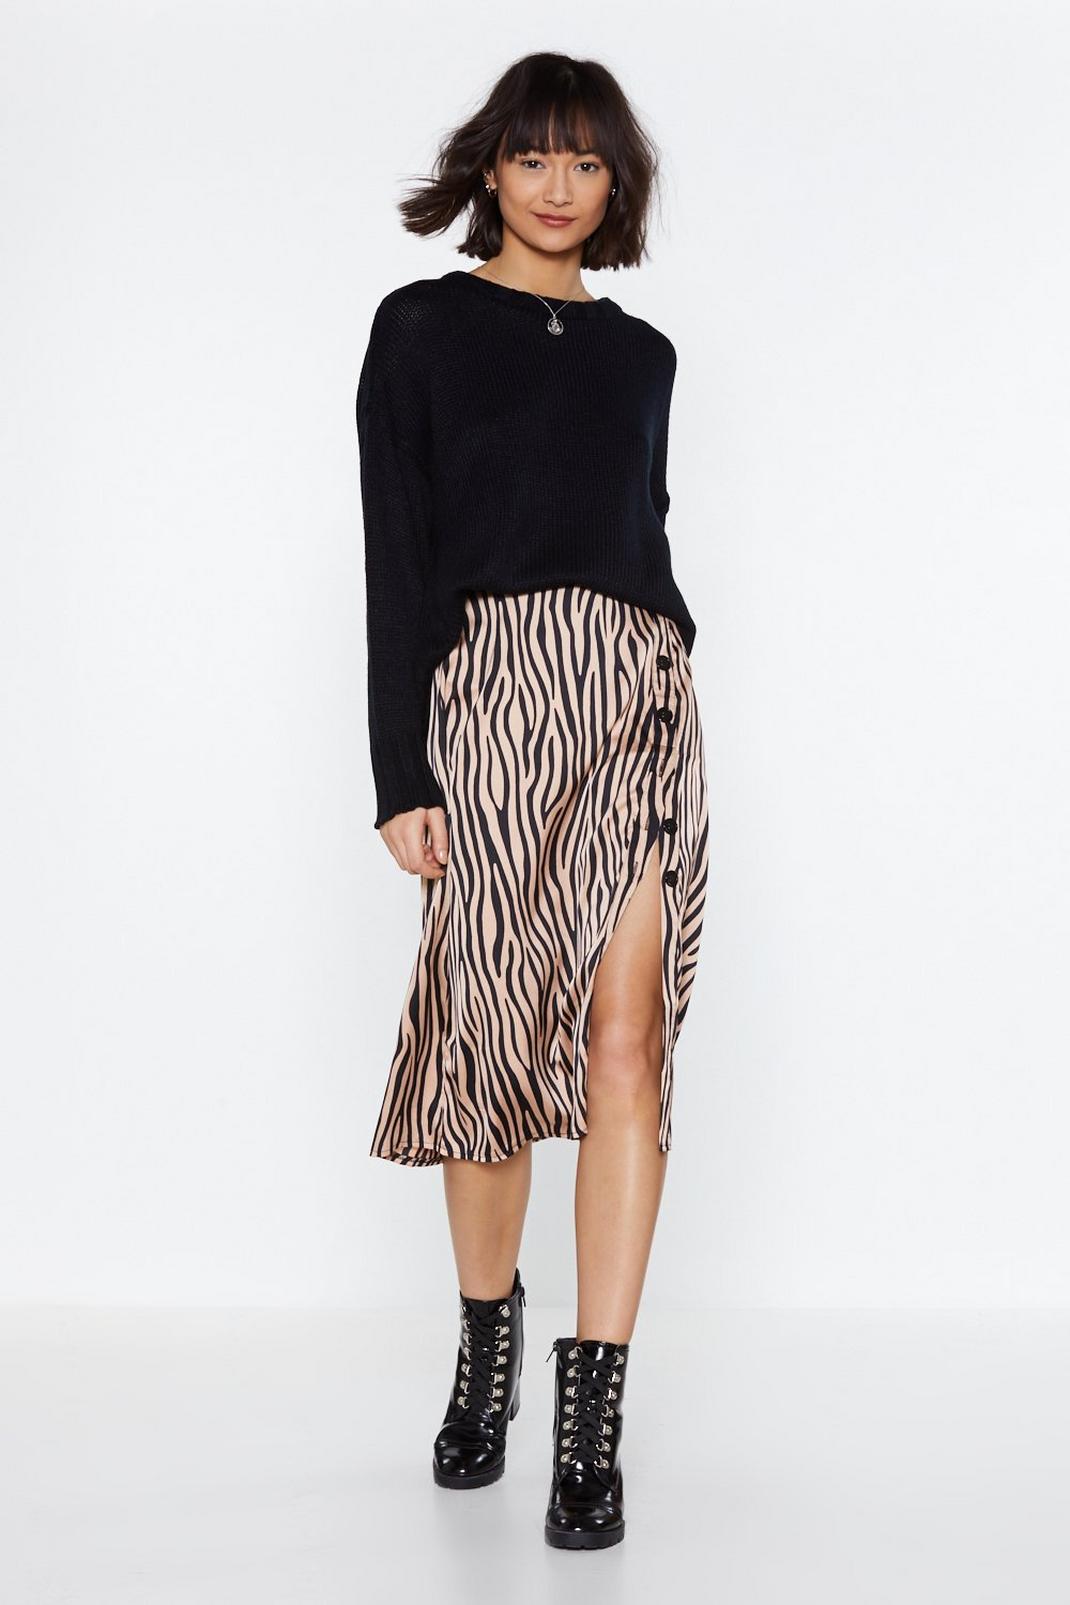 It's Not All Black and White Zebra Skirt image number 1